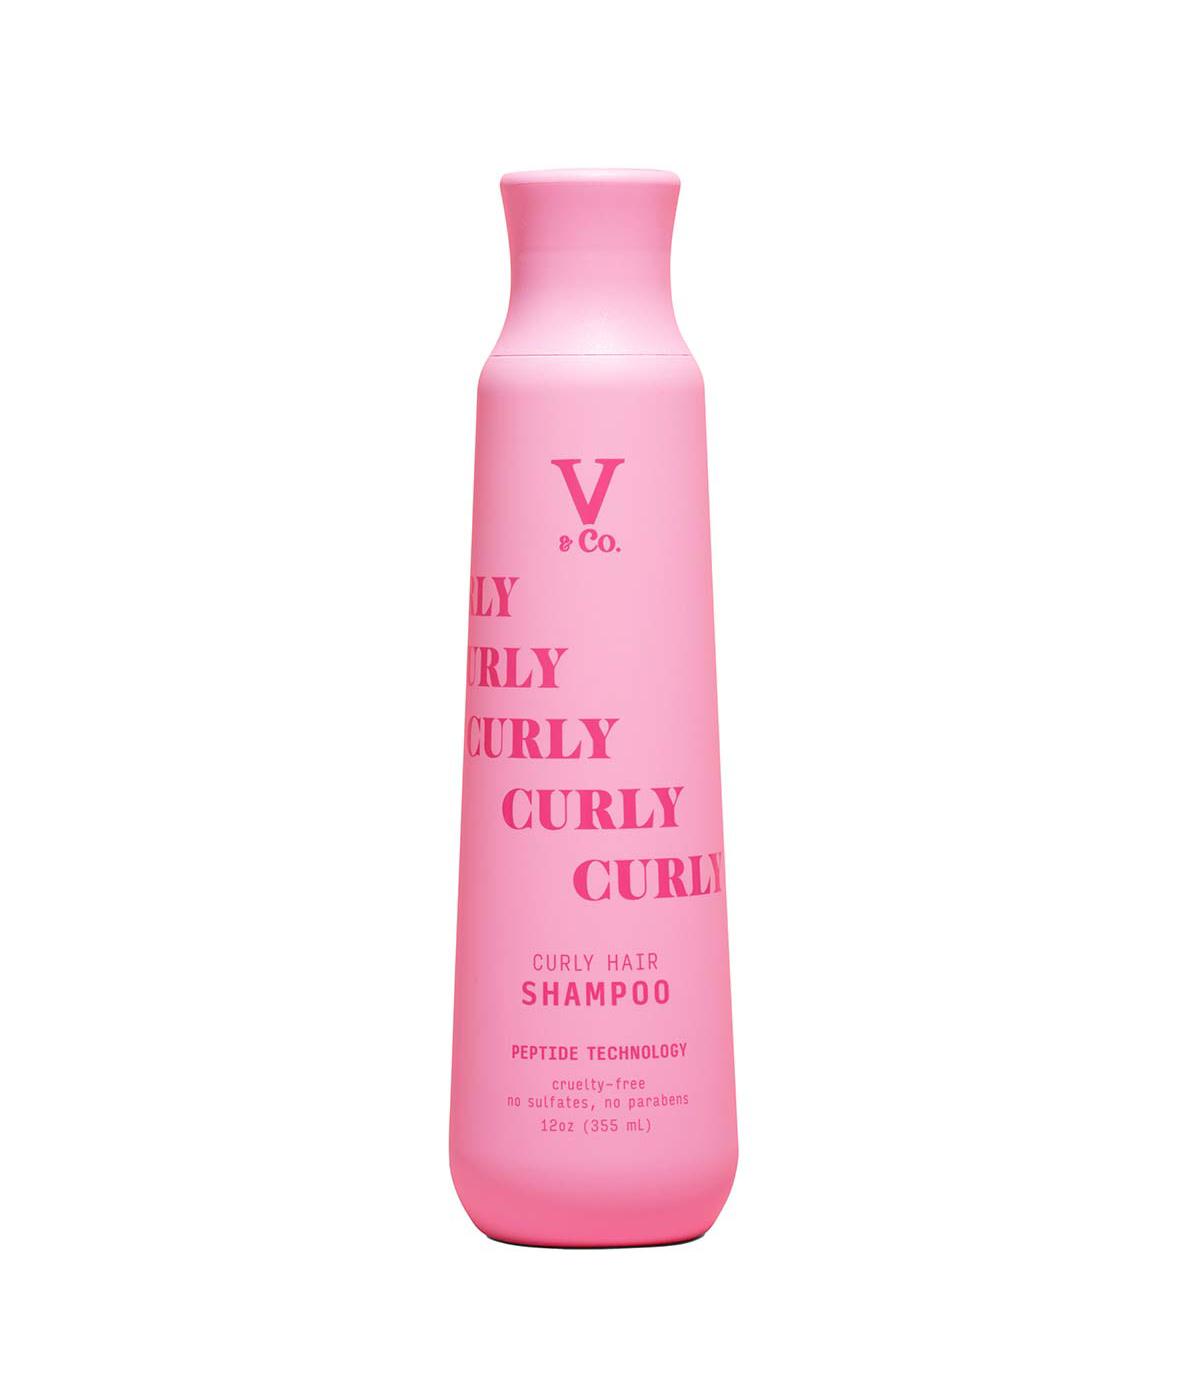 V&Co. Curly Hair Shampoo; image 1 of 2